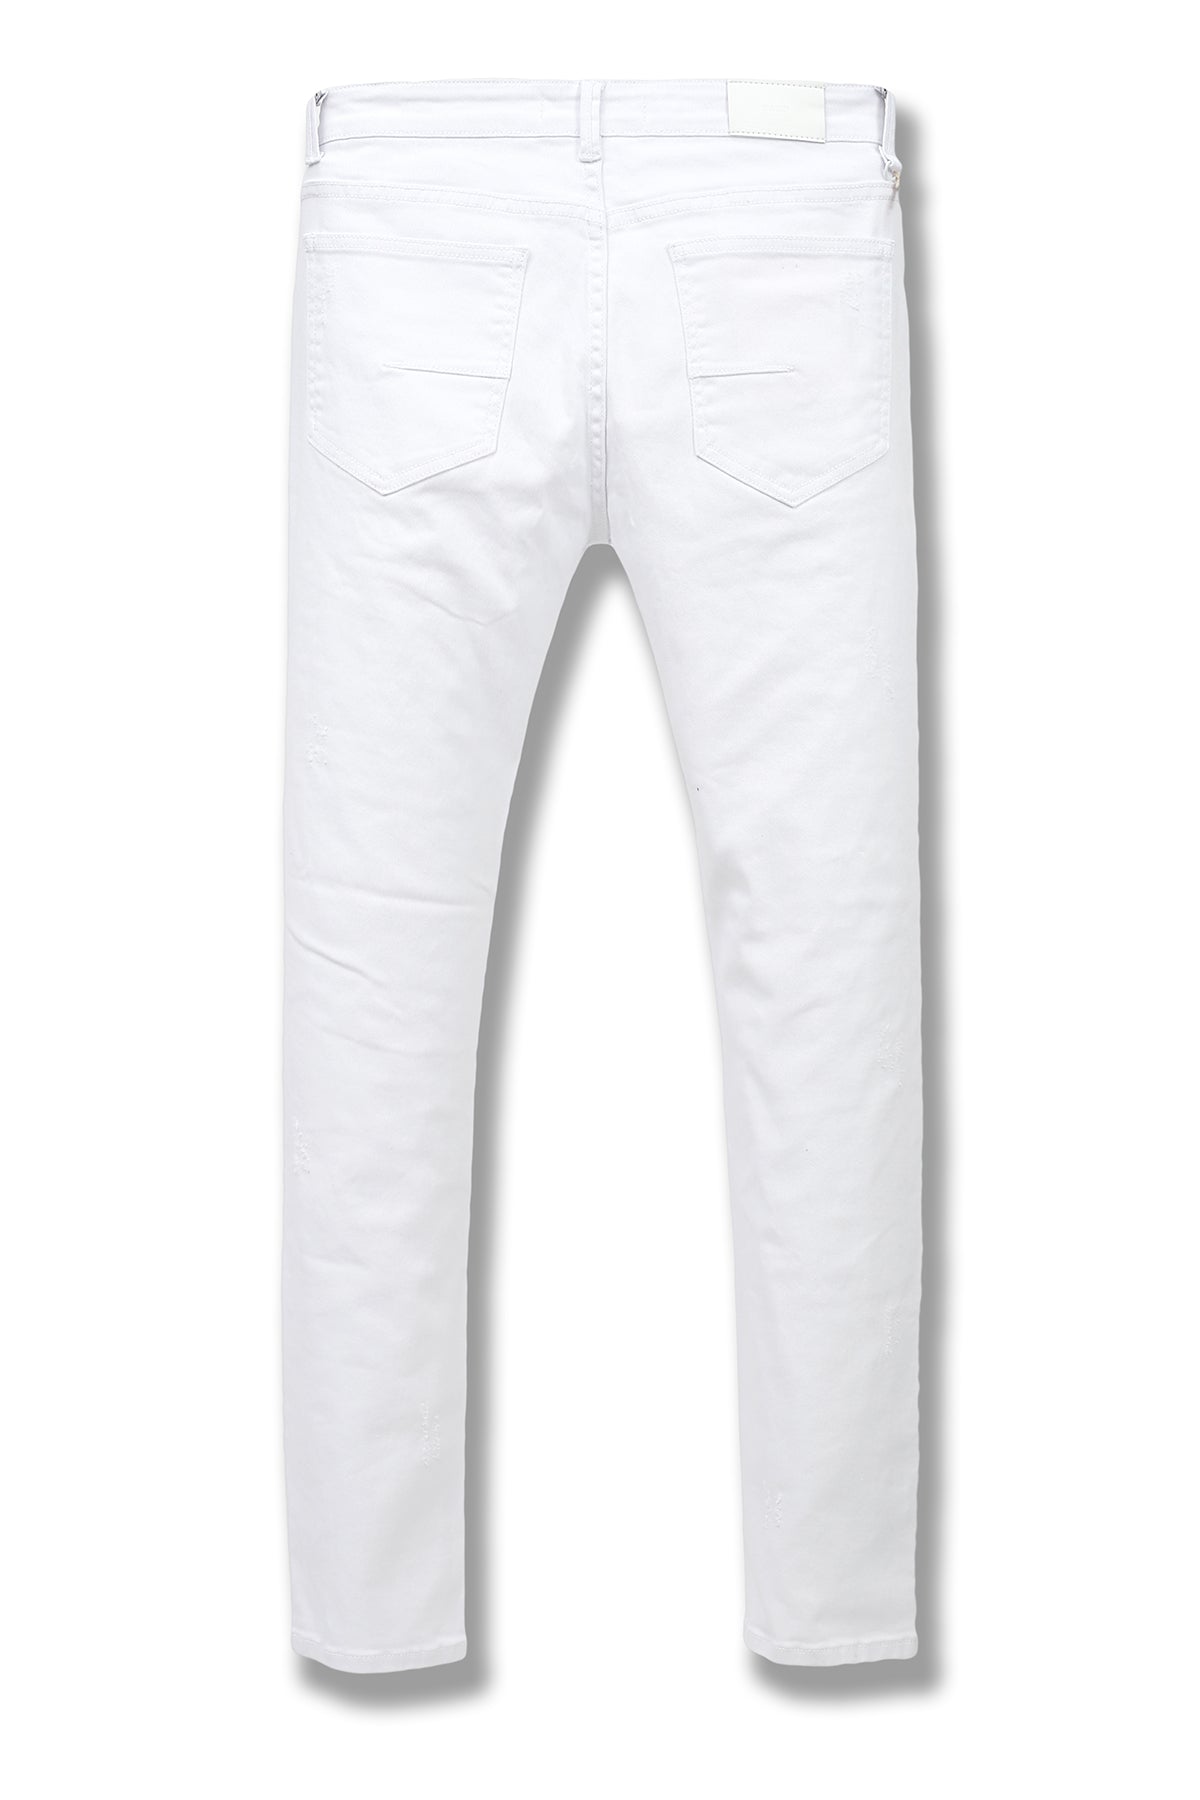 Stitch Pants (White) (6614997368934)